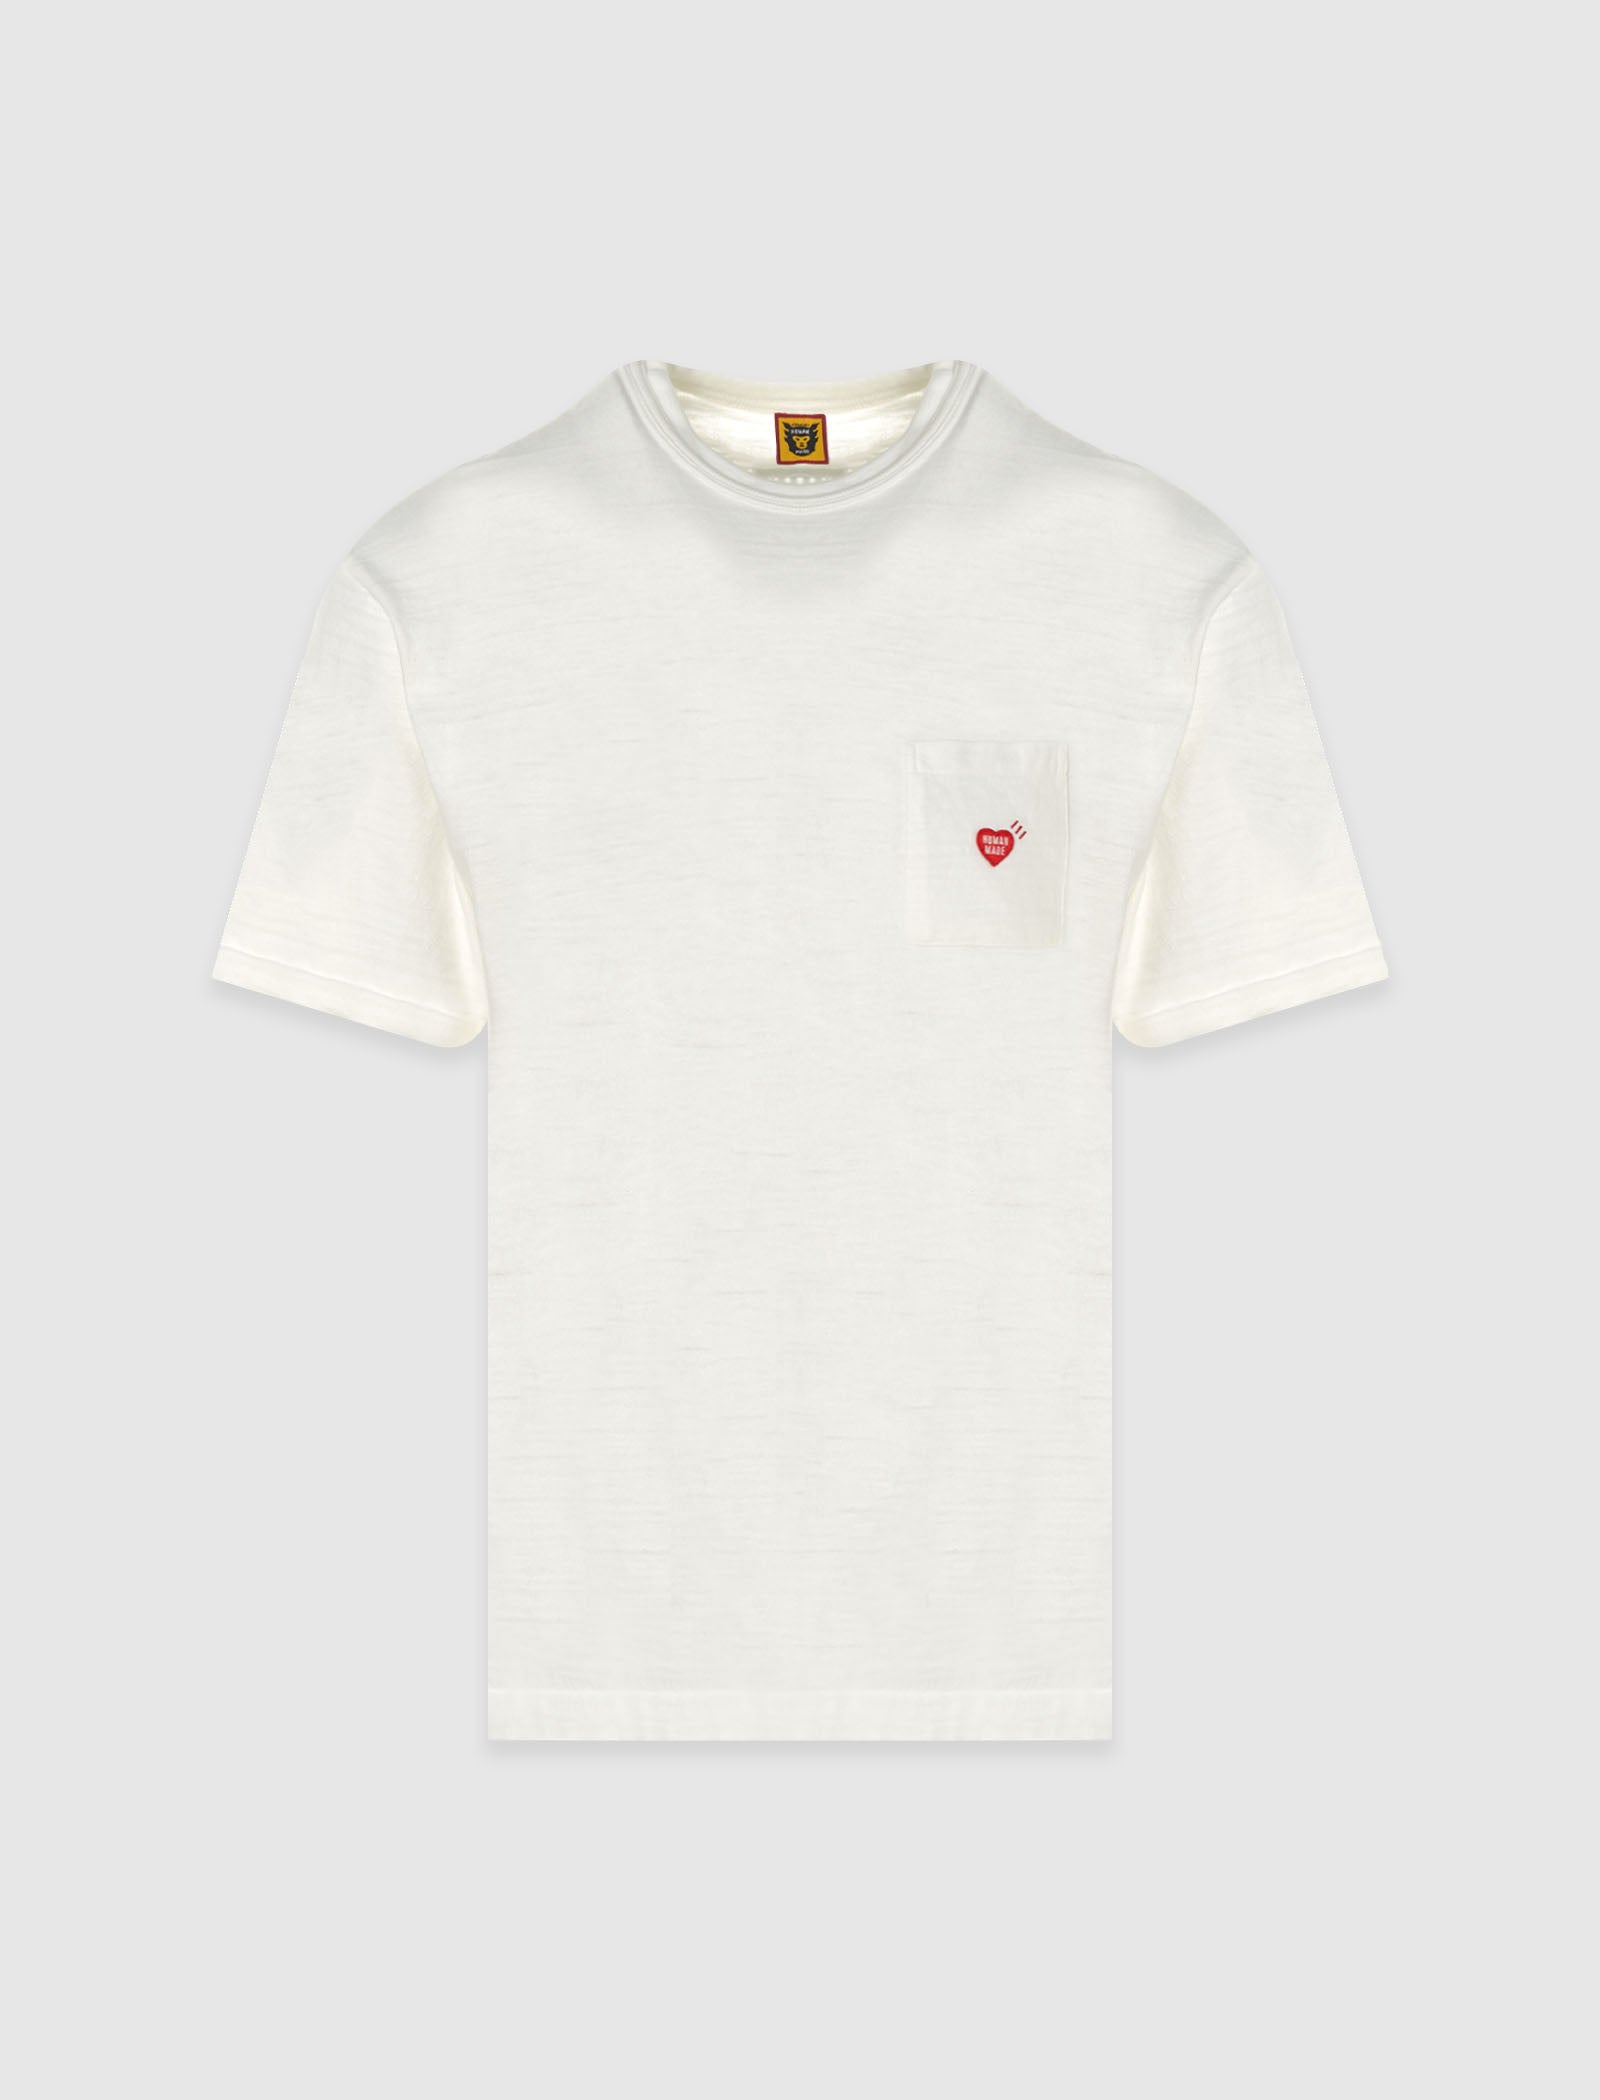 Human Made Pocket T-Shirt #2 3X